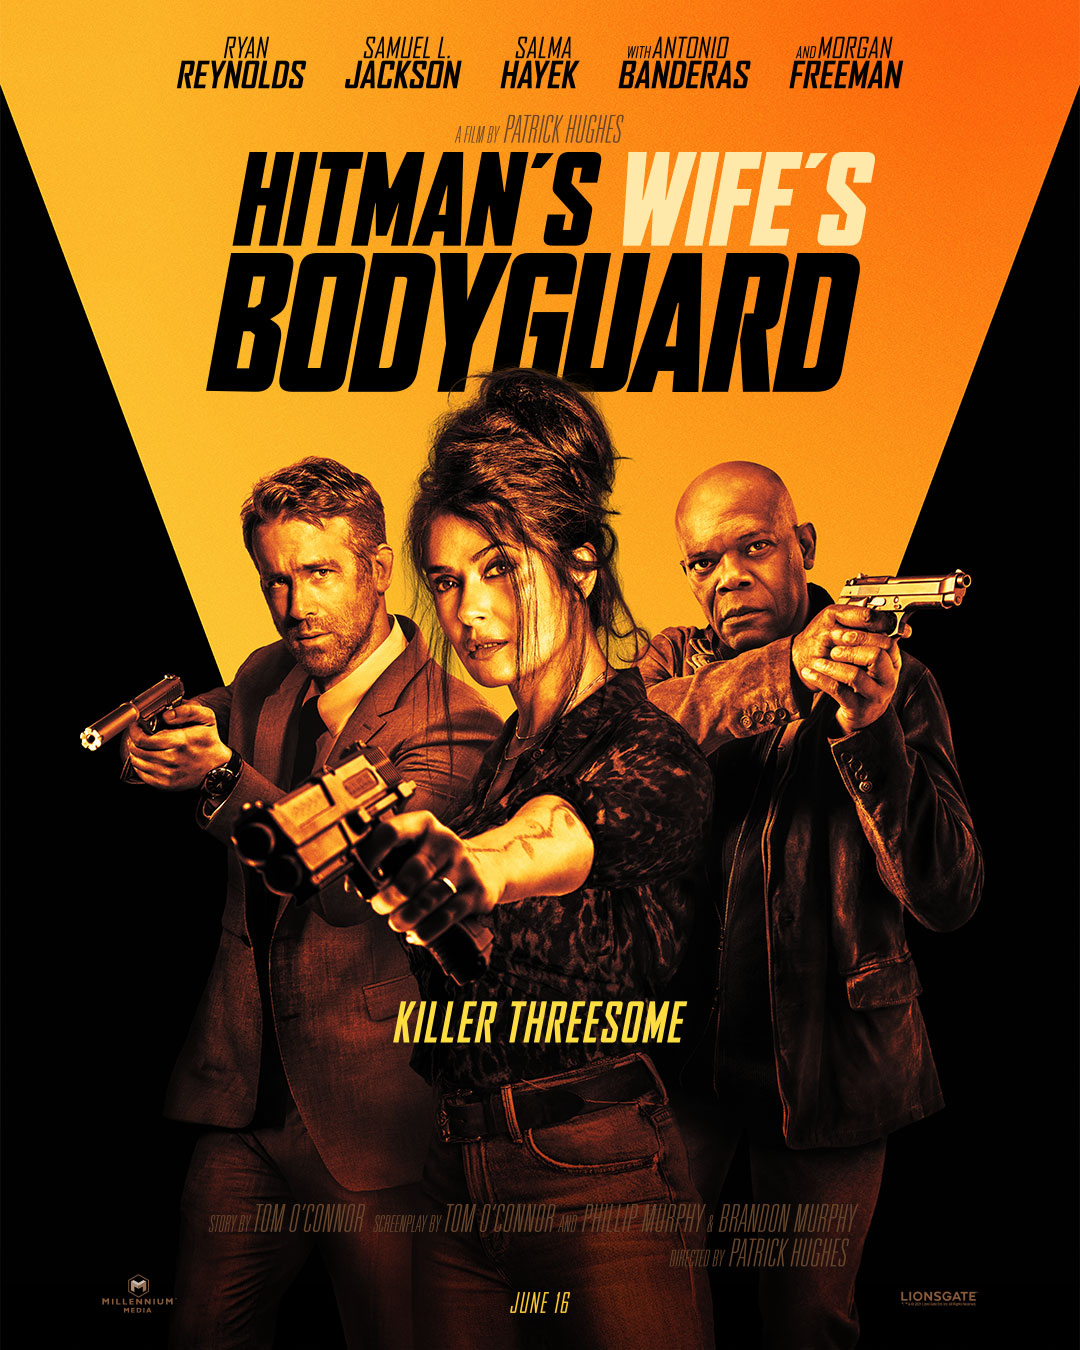 the hitmans bodyguard soundtrack